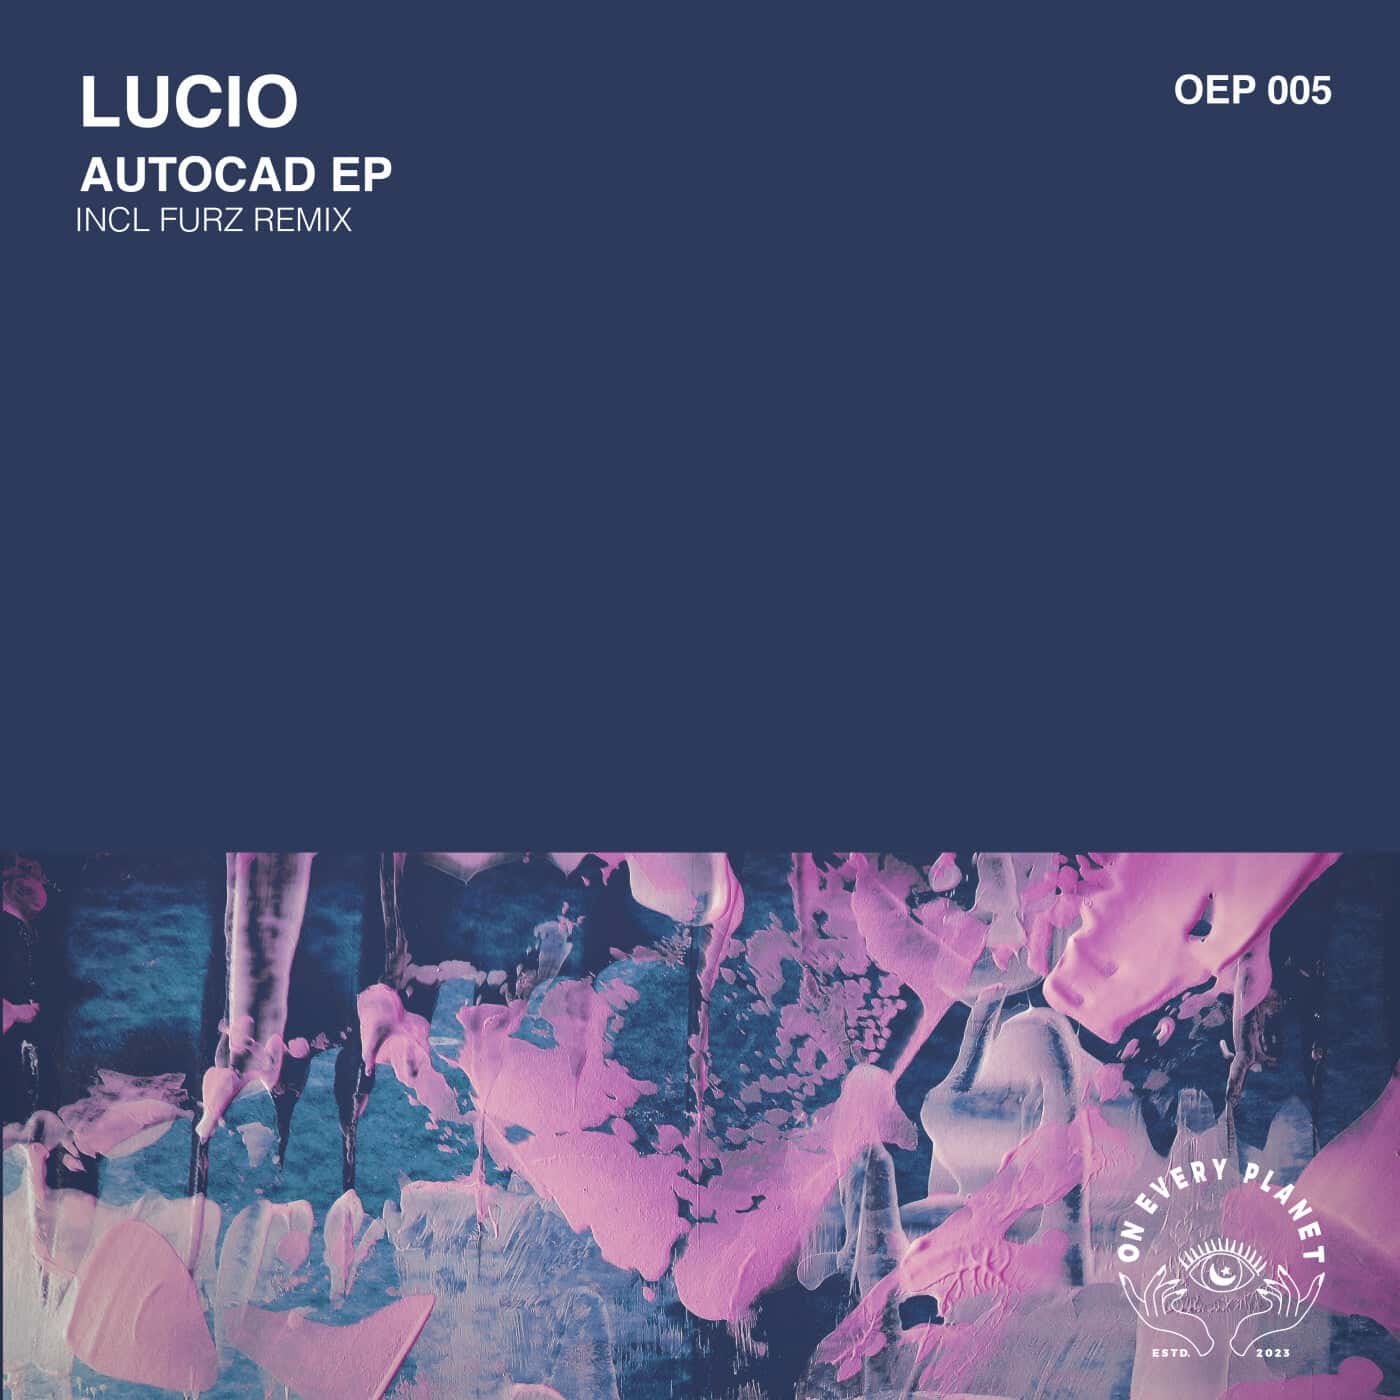 image cover: LUCIO (Italy) - Autocad / OEP005